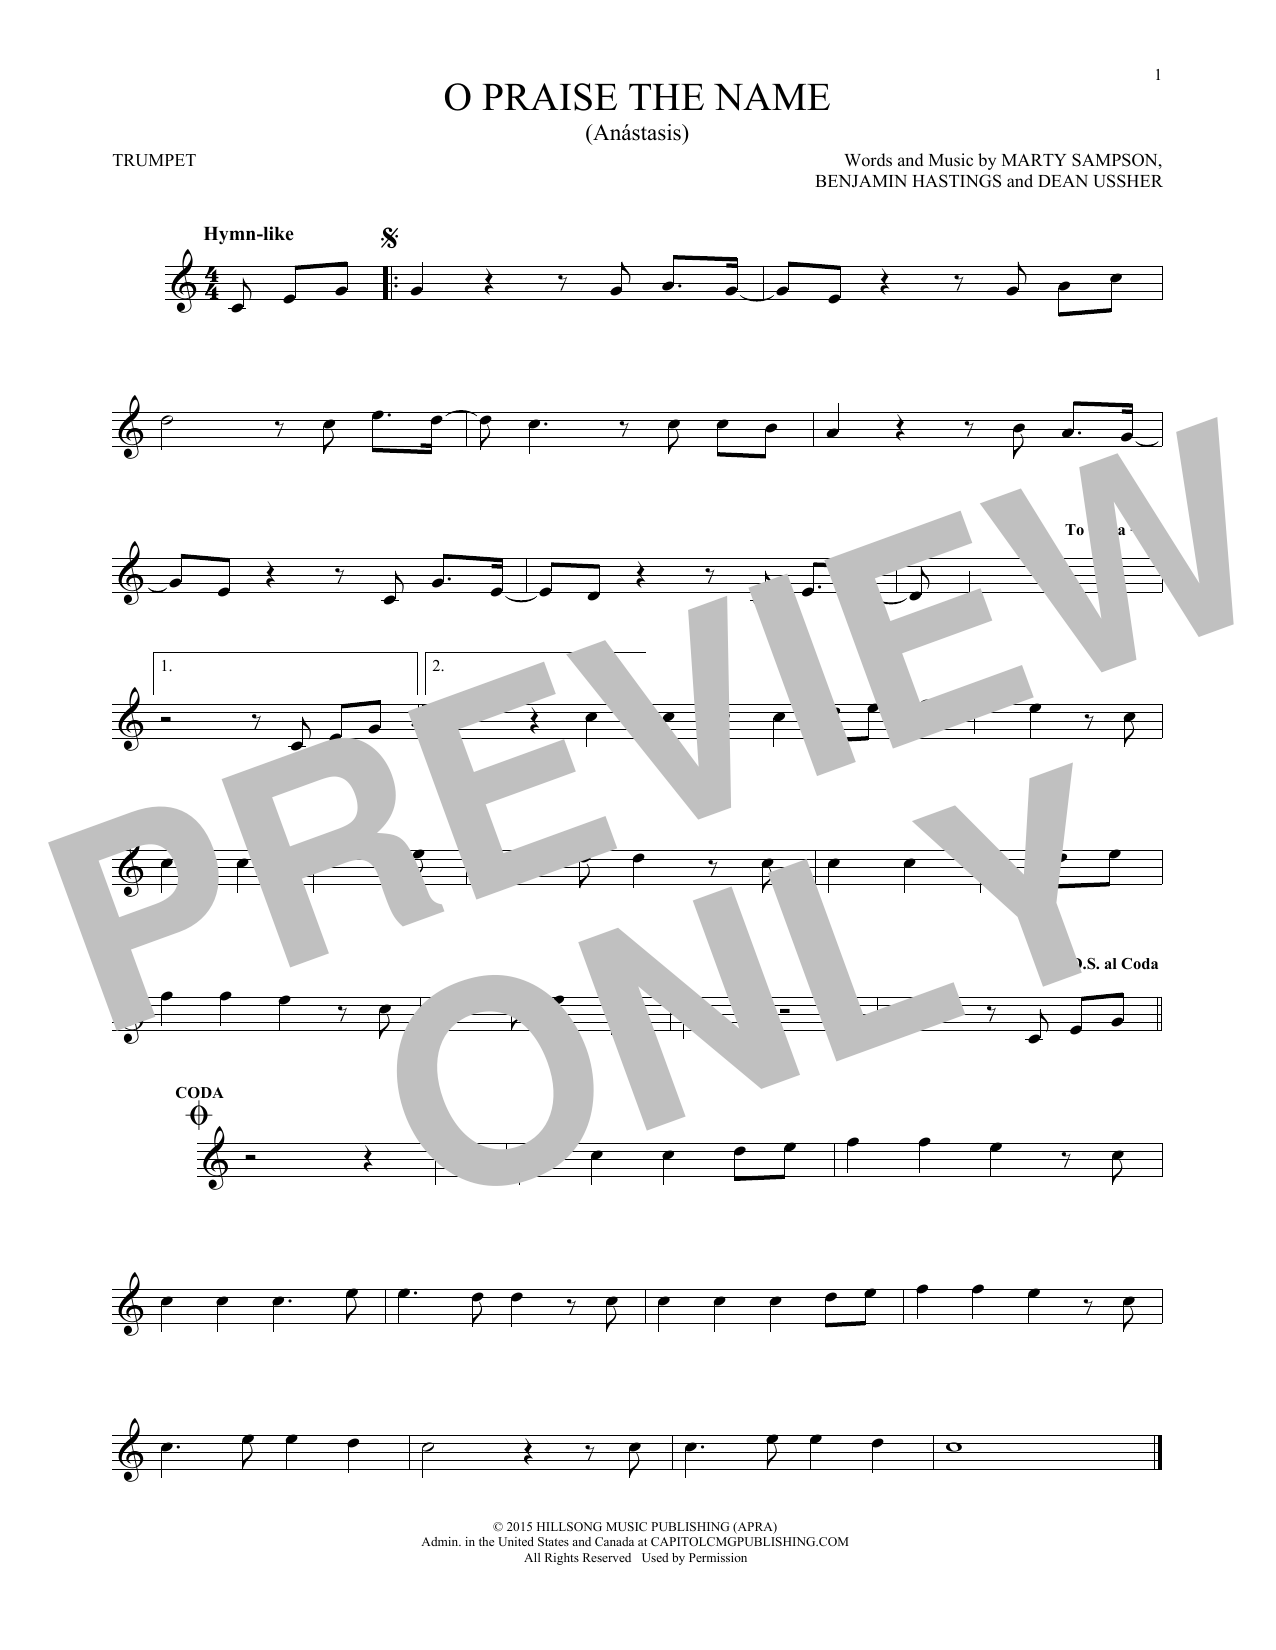 Hillsong Worship O Praise The Name (Anastasis) Sheet Music Notes & Chords for Melody Line, Lyrics & Chords - Download or Print PDF